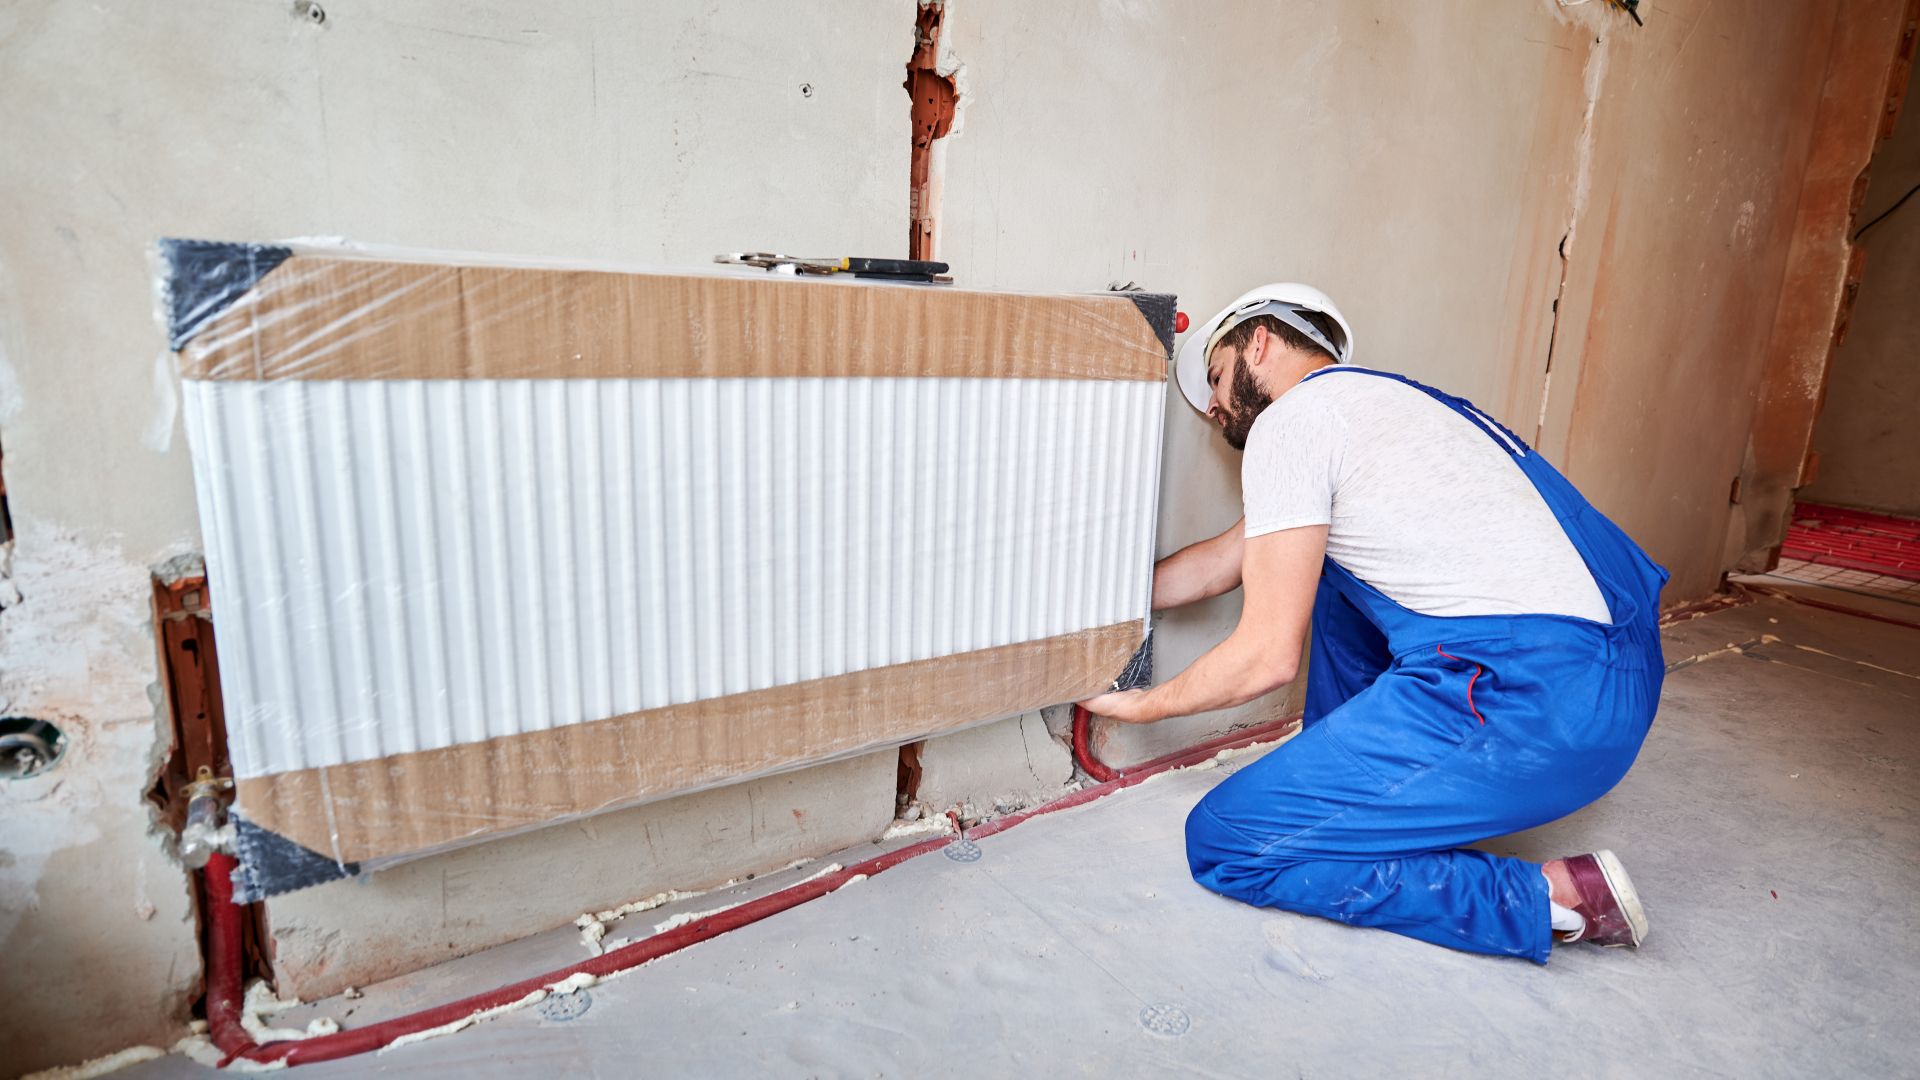 Workman installing new efficient radiators during a renovation